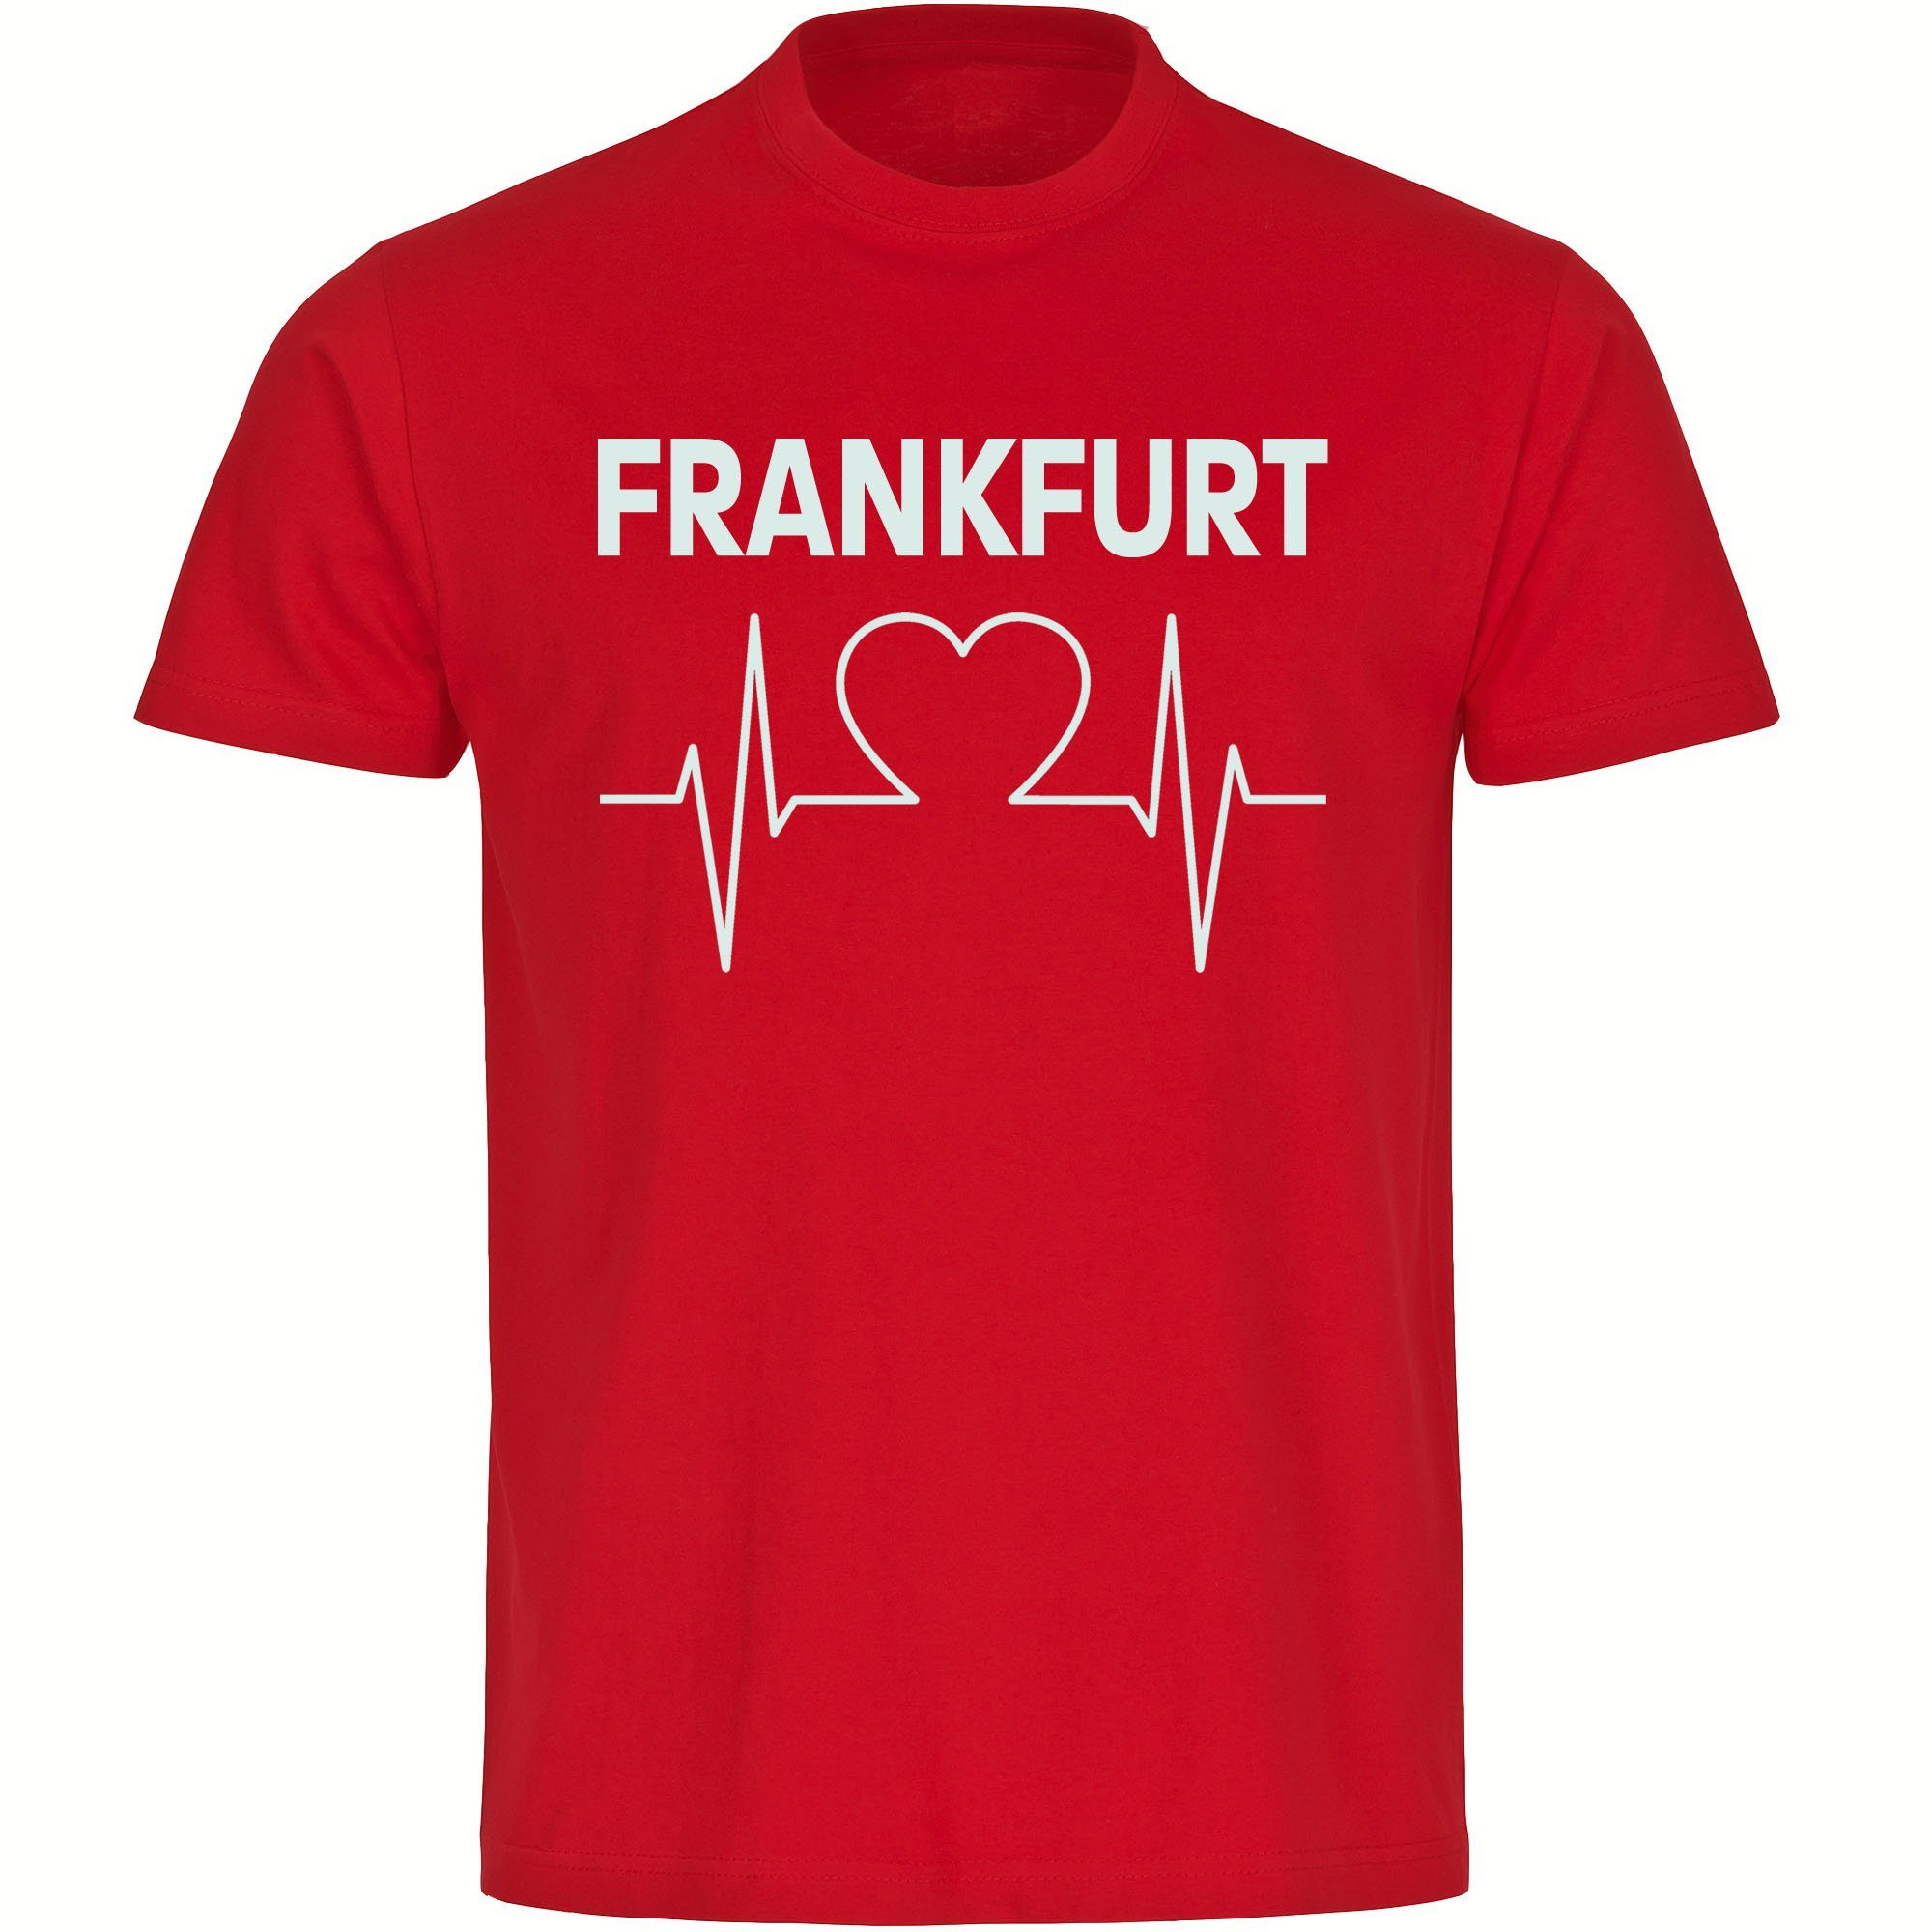 multifanshop T-Shirt Kinder Frankfurt - Herzschlag - Boy Girl